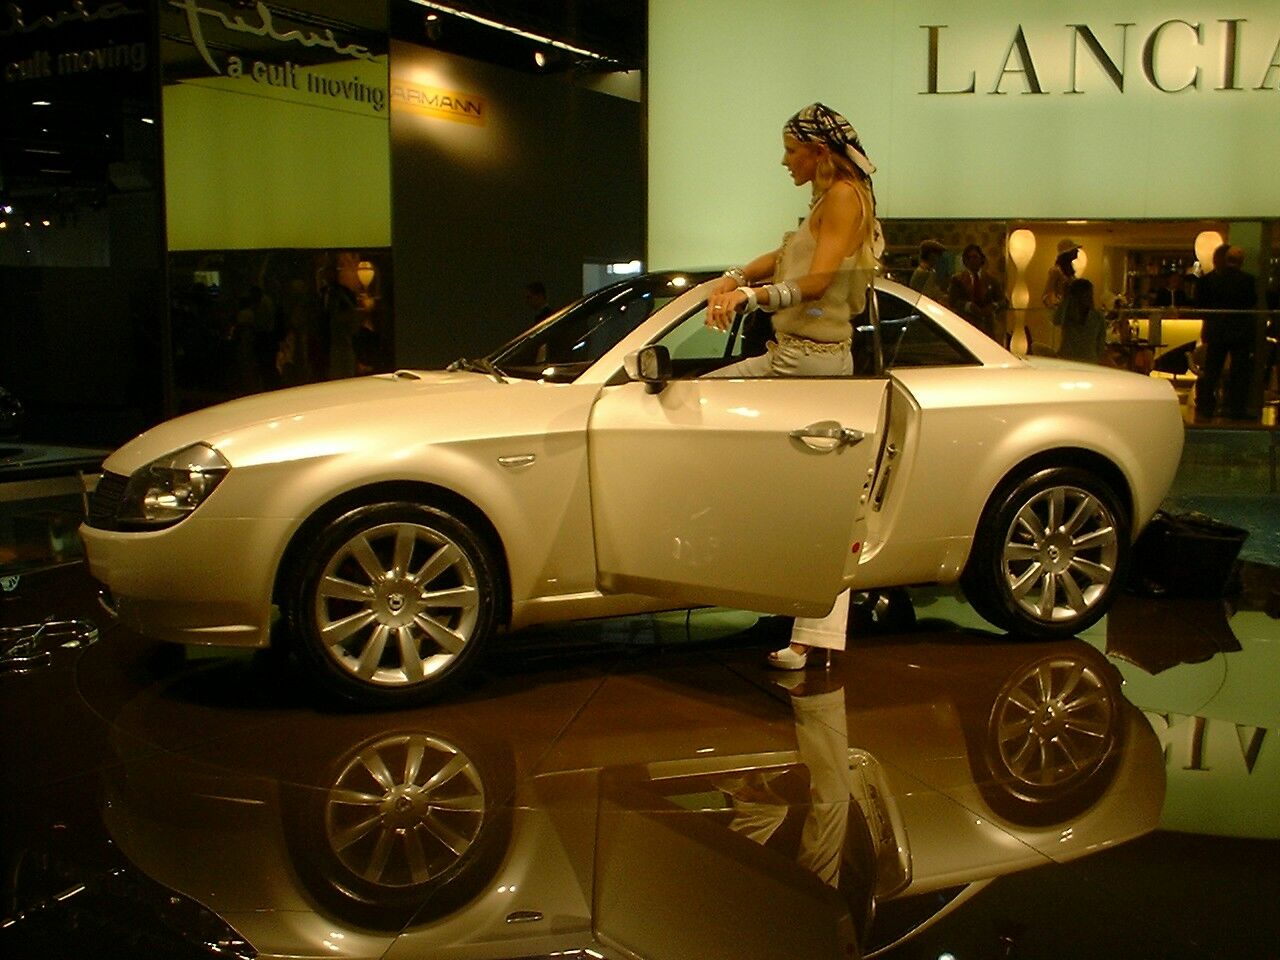 The Lancia Fulvia Coupe at the 2003 Frankfurt Motor Show